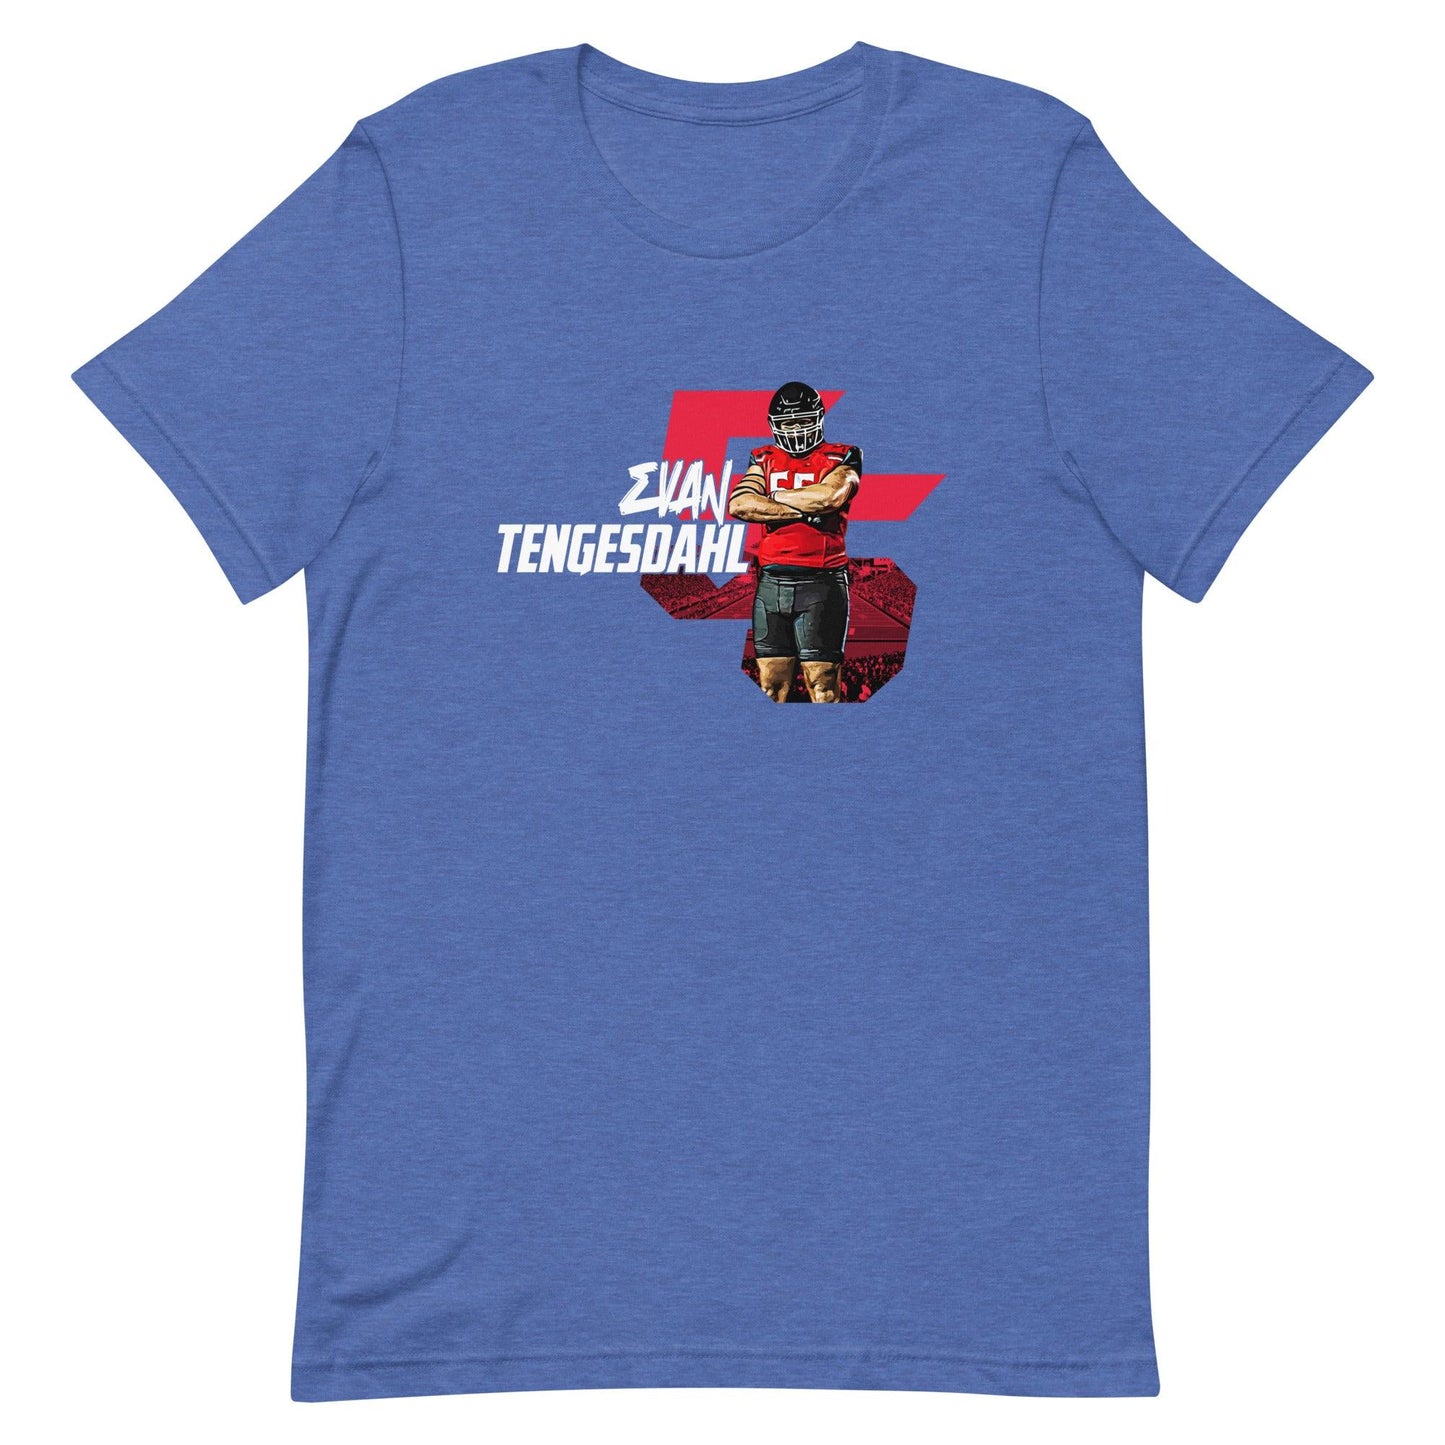 Evan Tengesdahl "Gameday" t-shirt - Fan Arch